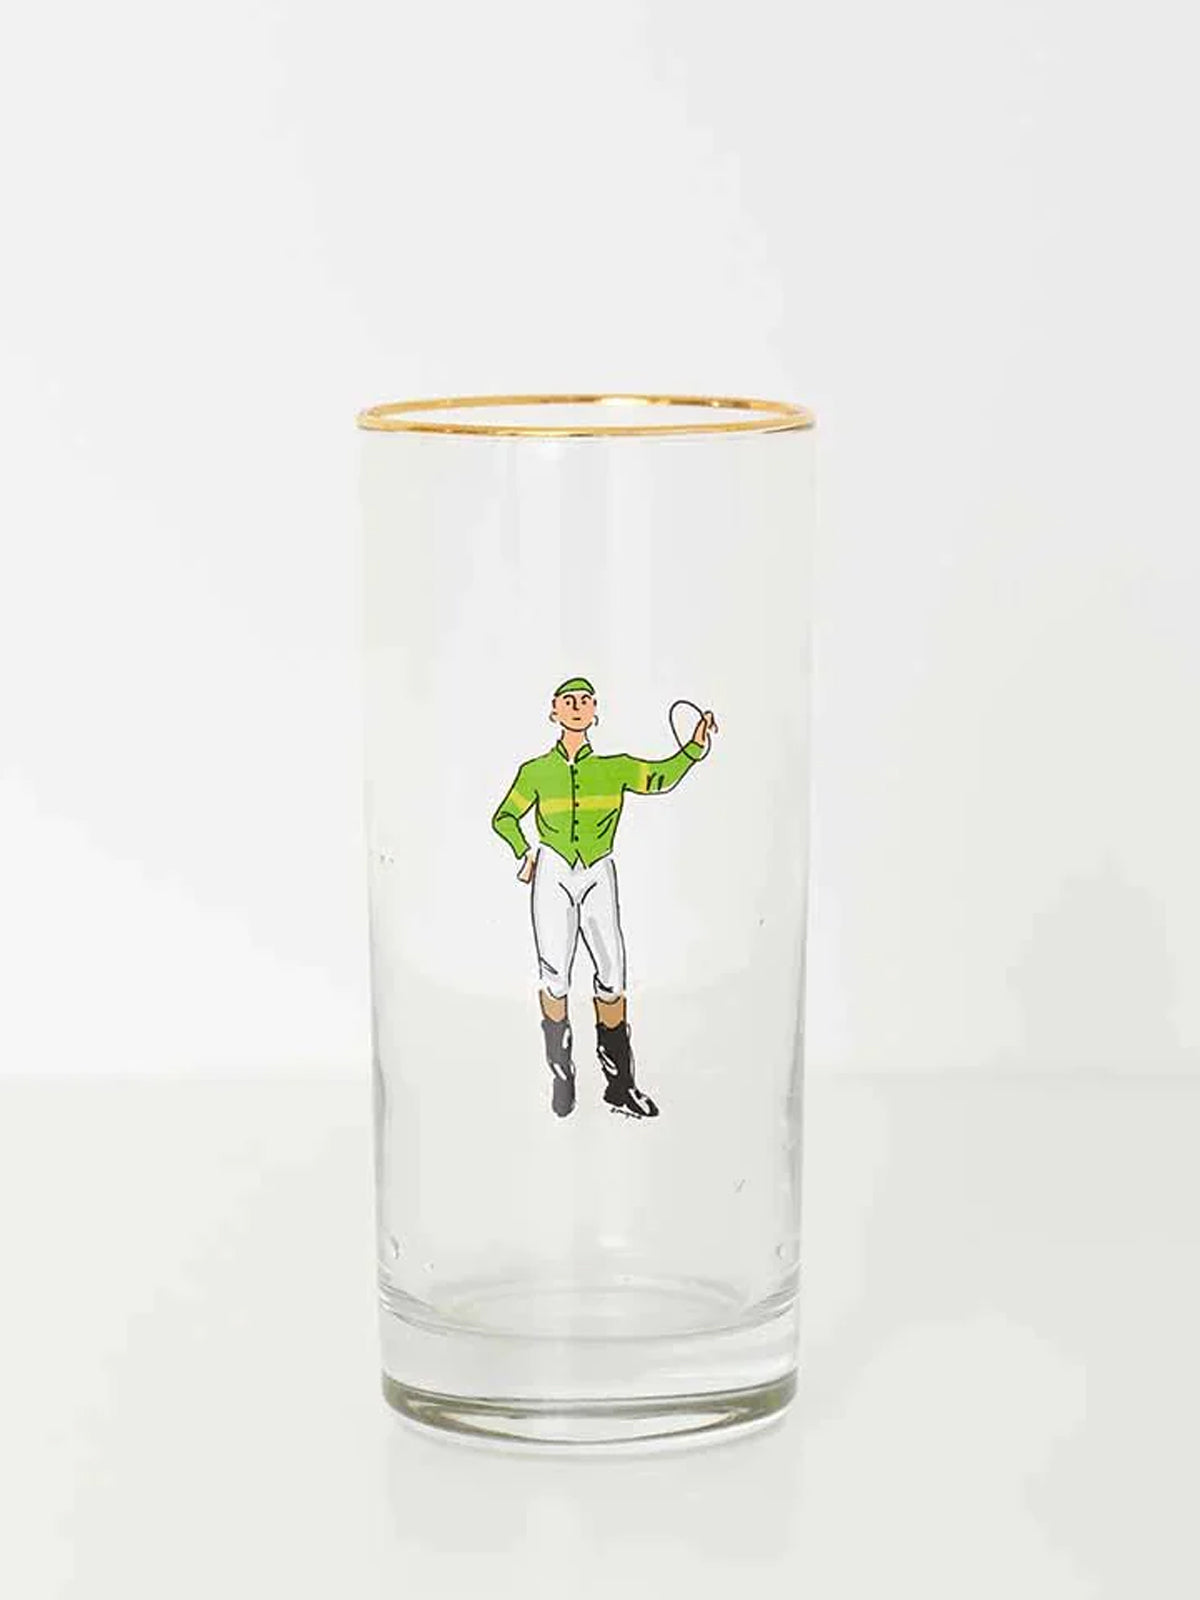 Jockey Drinking Glasses, Set of 4